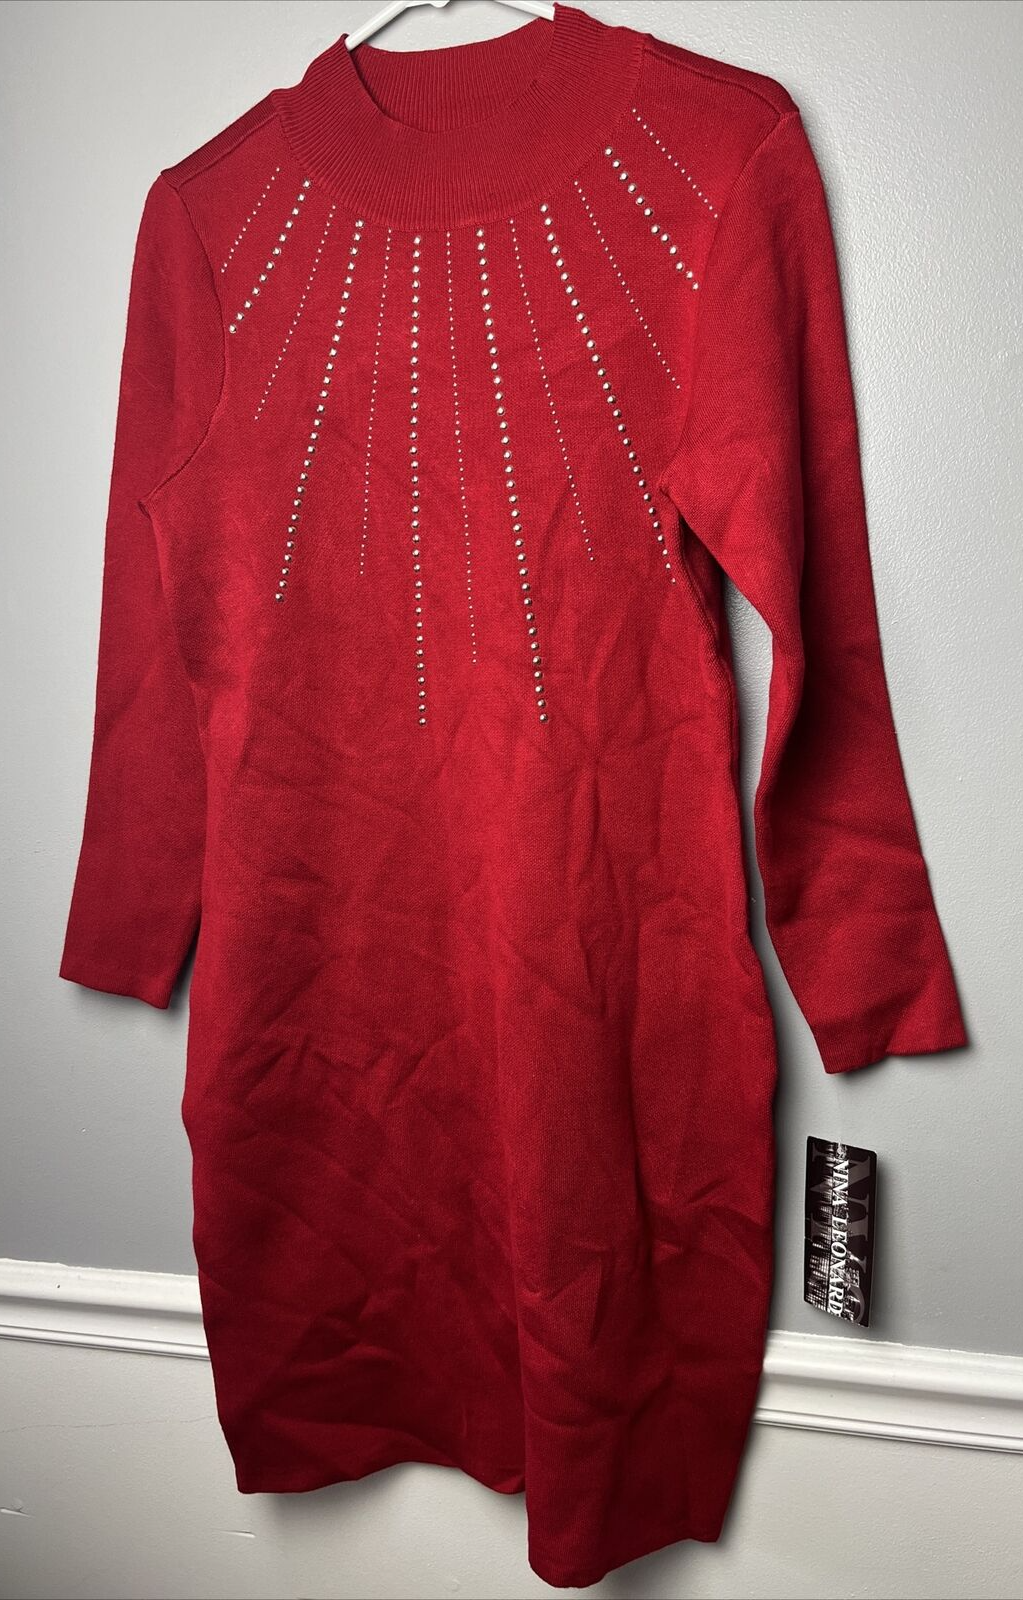 Women's Nina Leonard Studded Red Sweater Dress Size LARGE